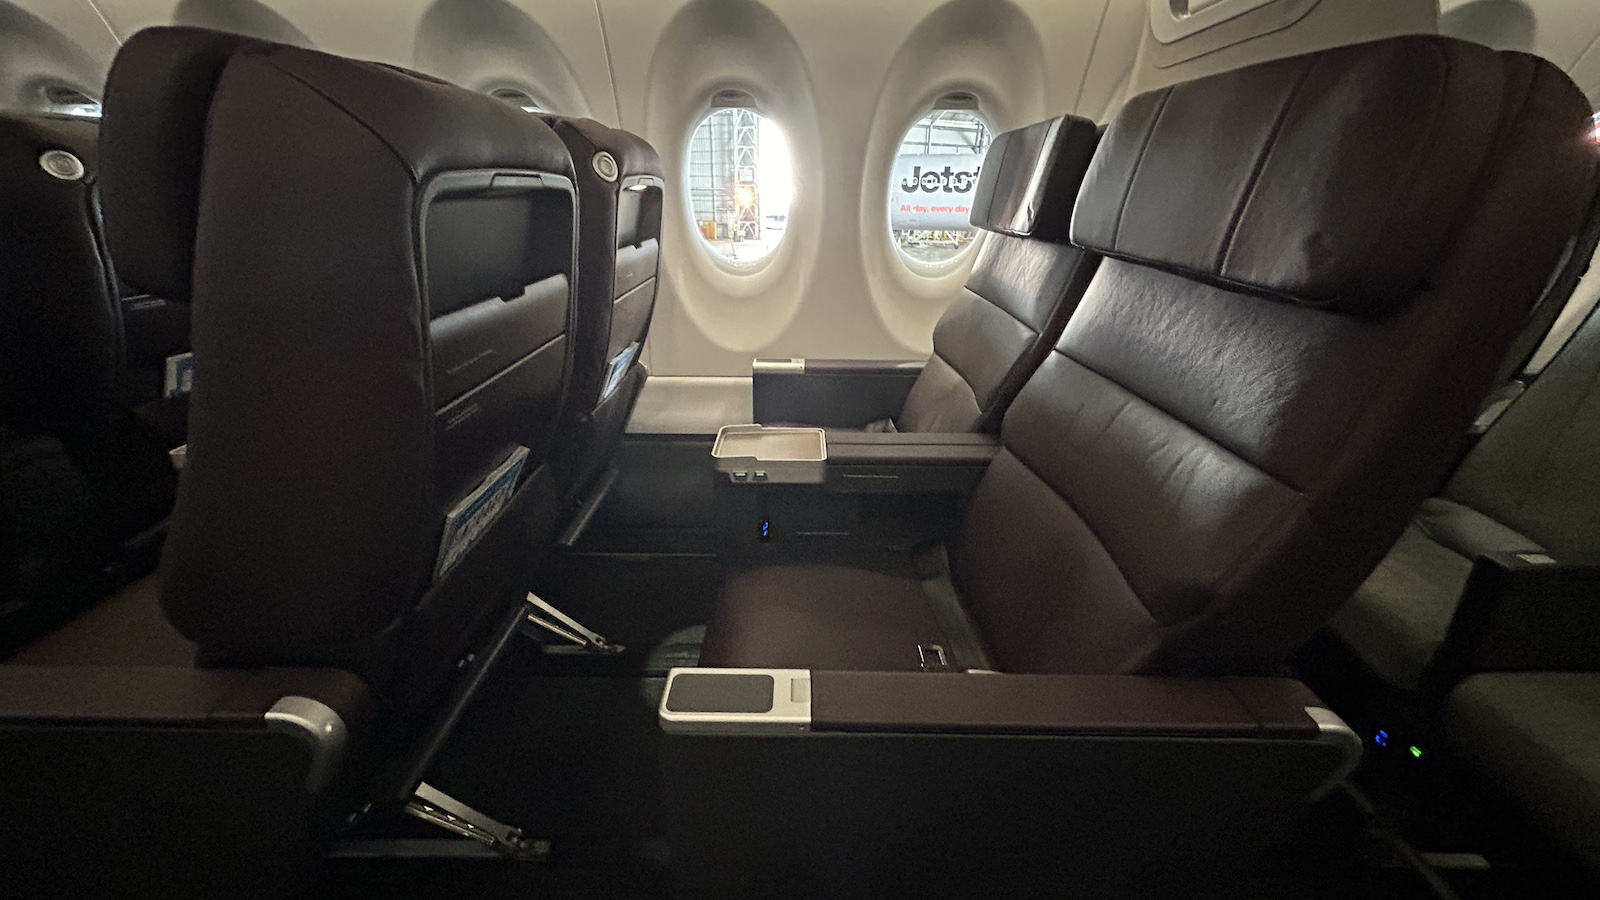 Qantaslink A220 Business Class Leather Seats Side View Point Hacks by Daniel Sciberras